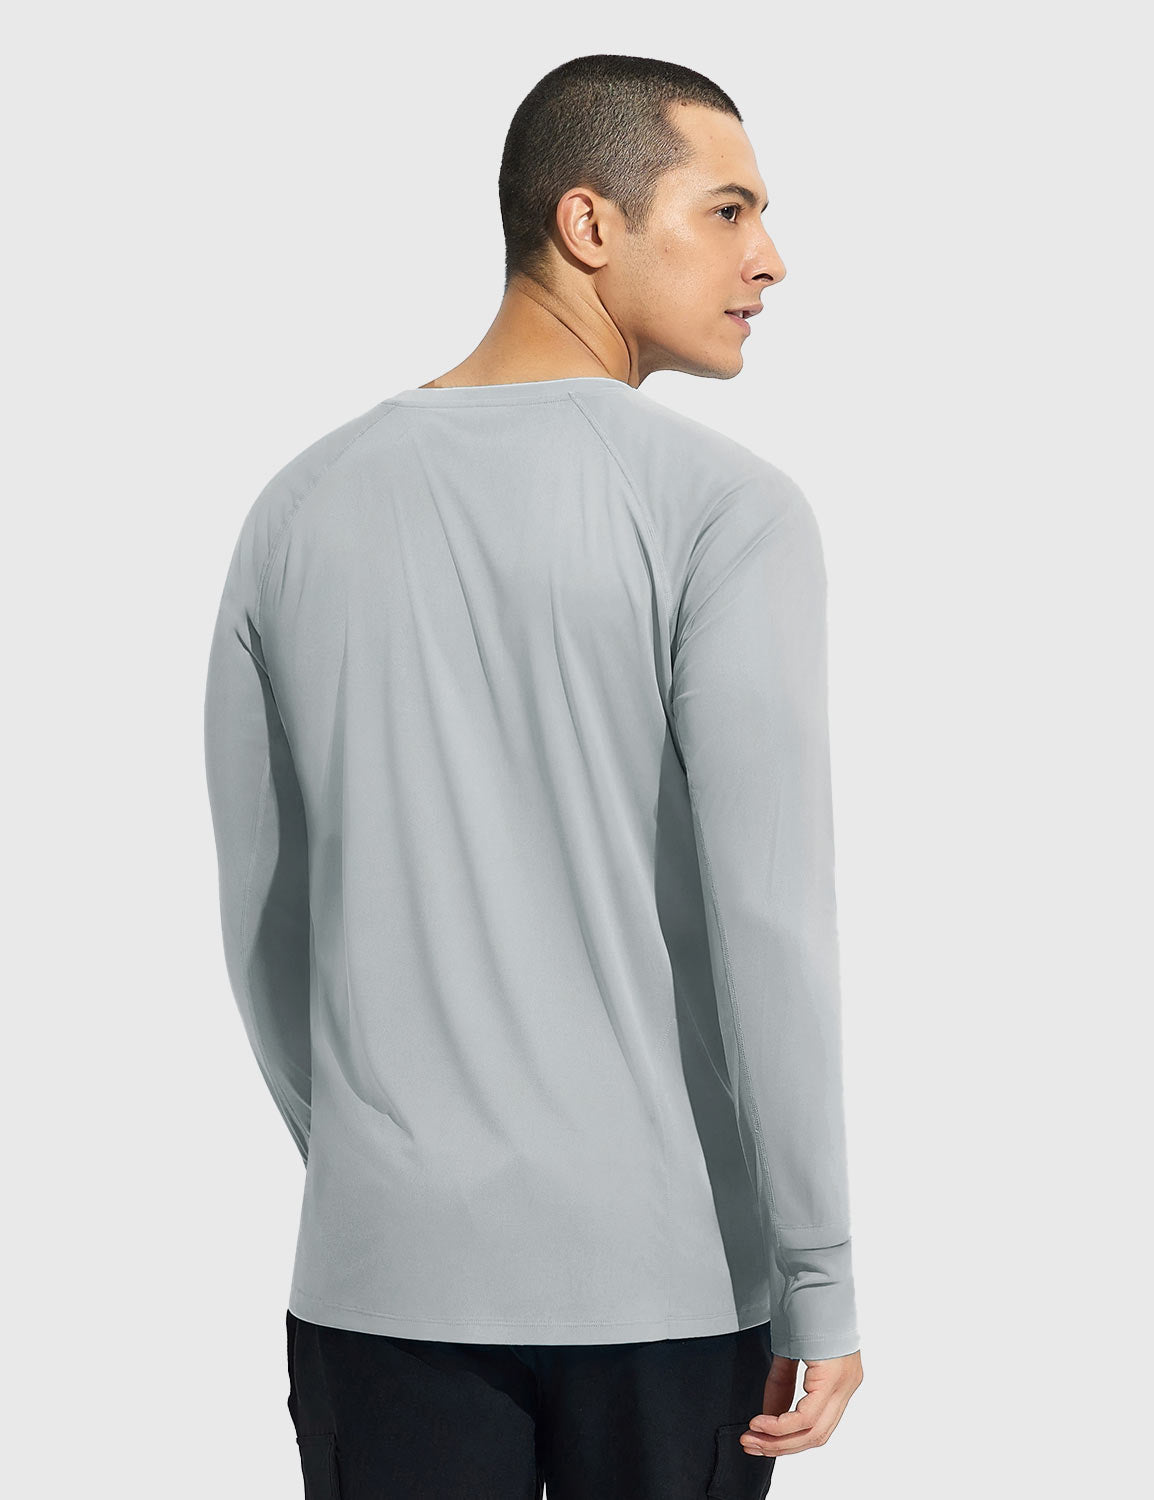 Baleaf Men‘s Quick-dry UPF 50+ Zipper Pocket Shirt High-Rise Back